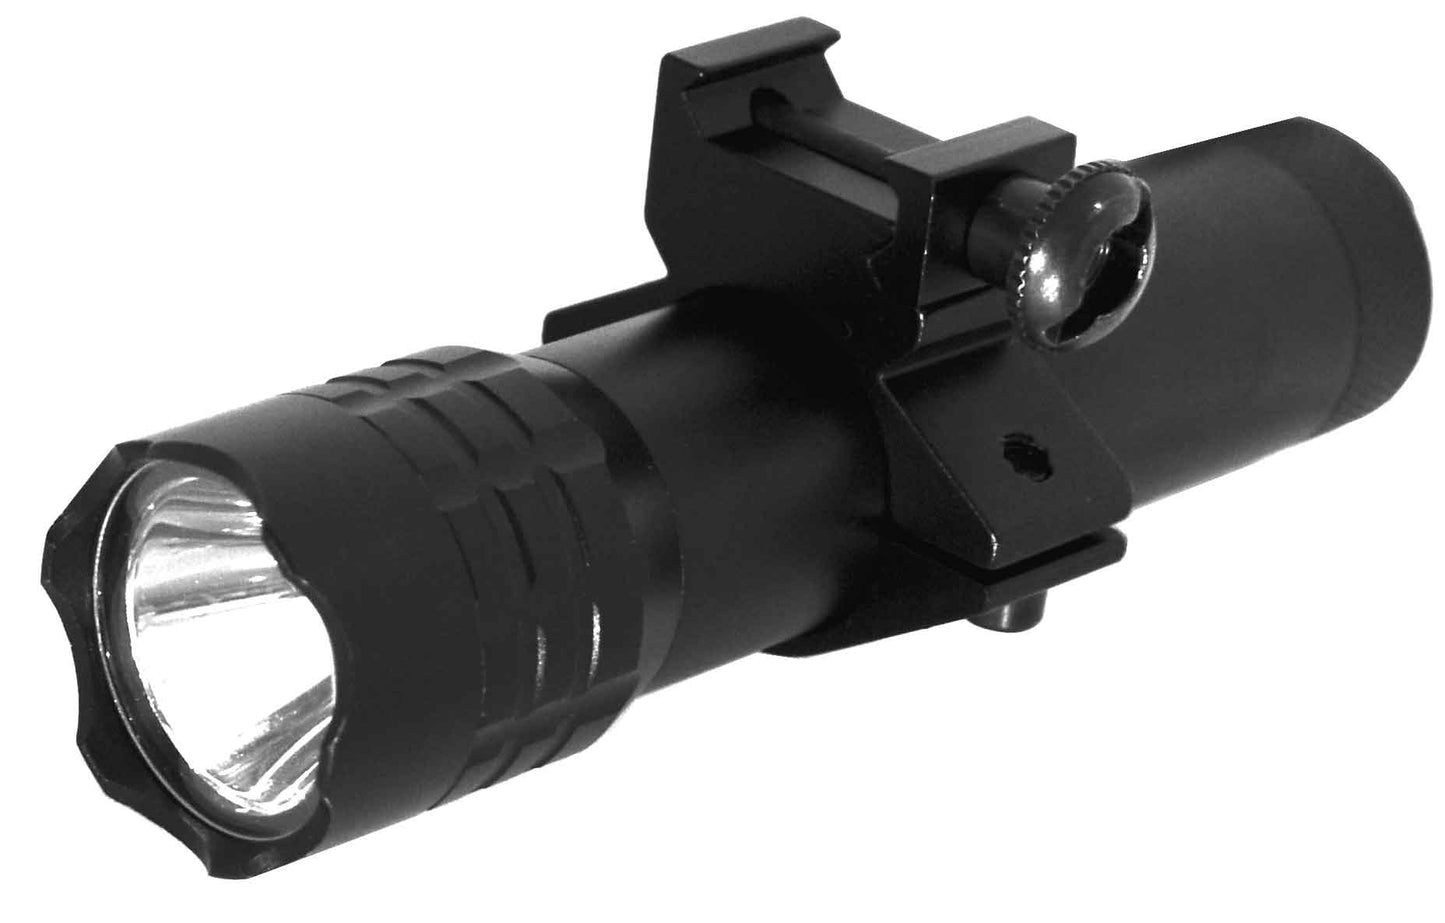 picatinny mounted flashlight for rifles and shotguns.